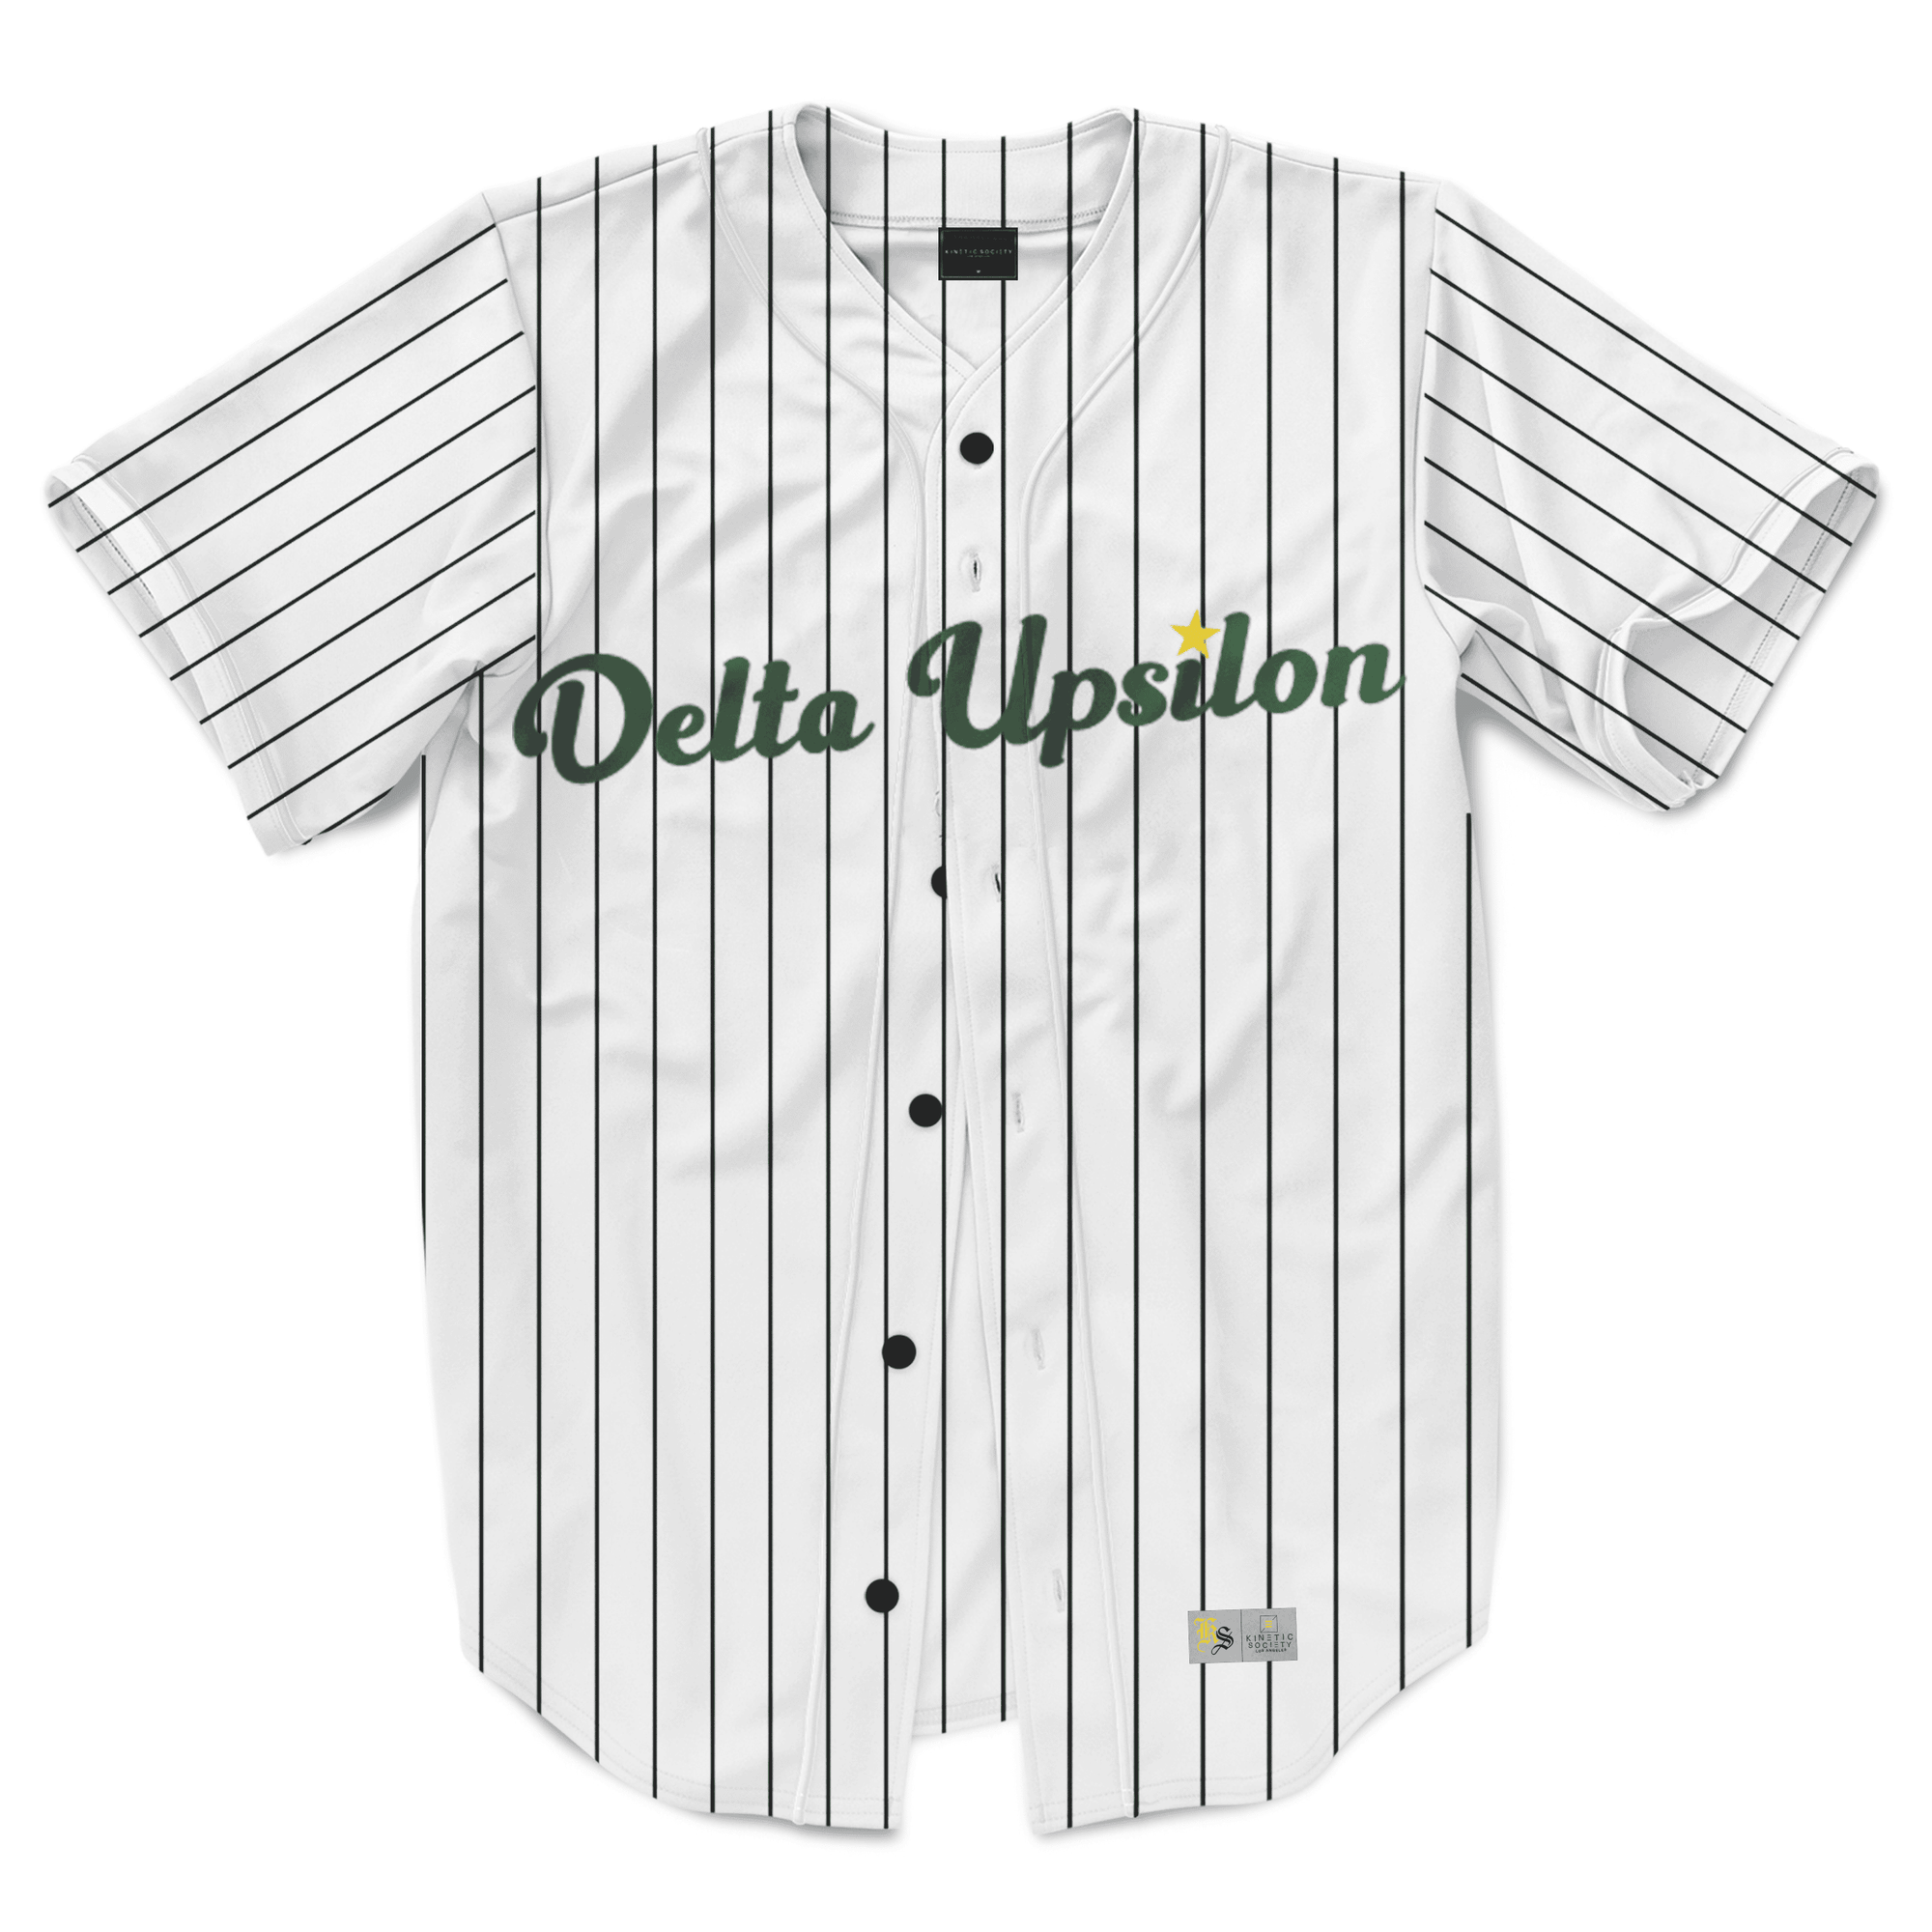 Delta Upsilon - Green Pinstripe Baseball Jersey